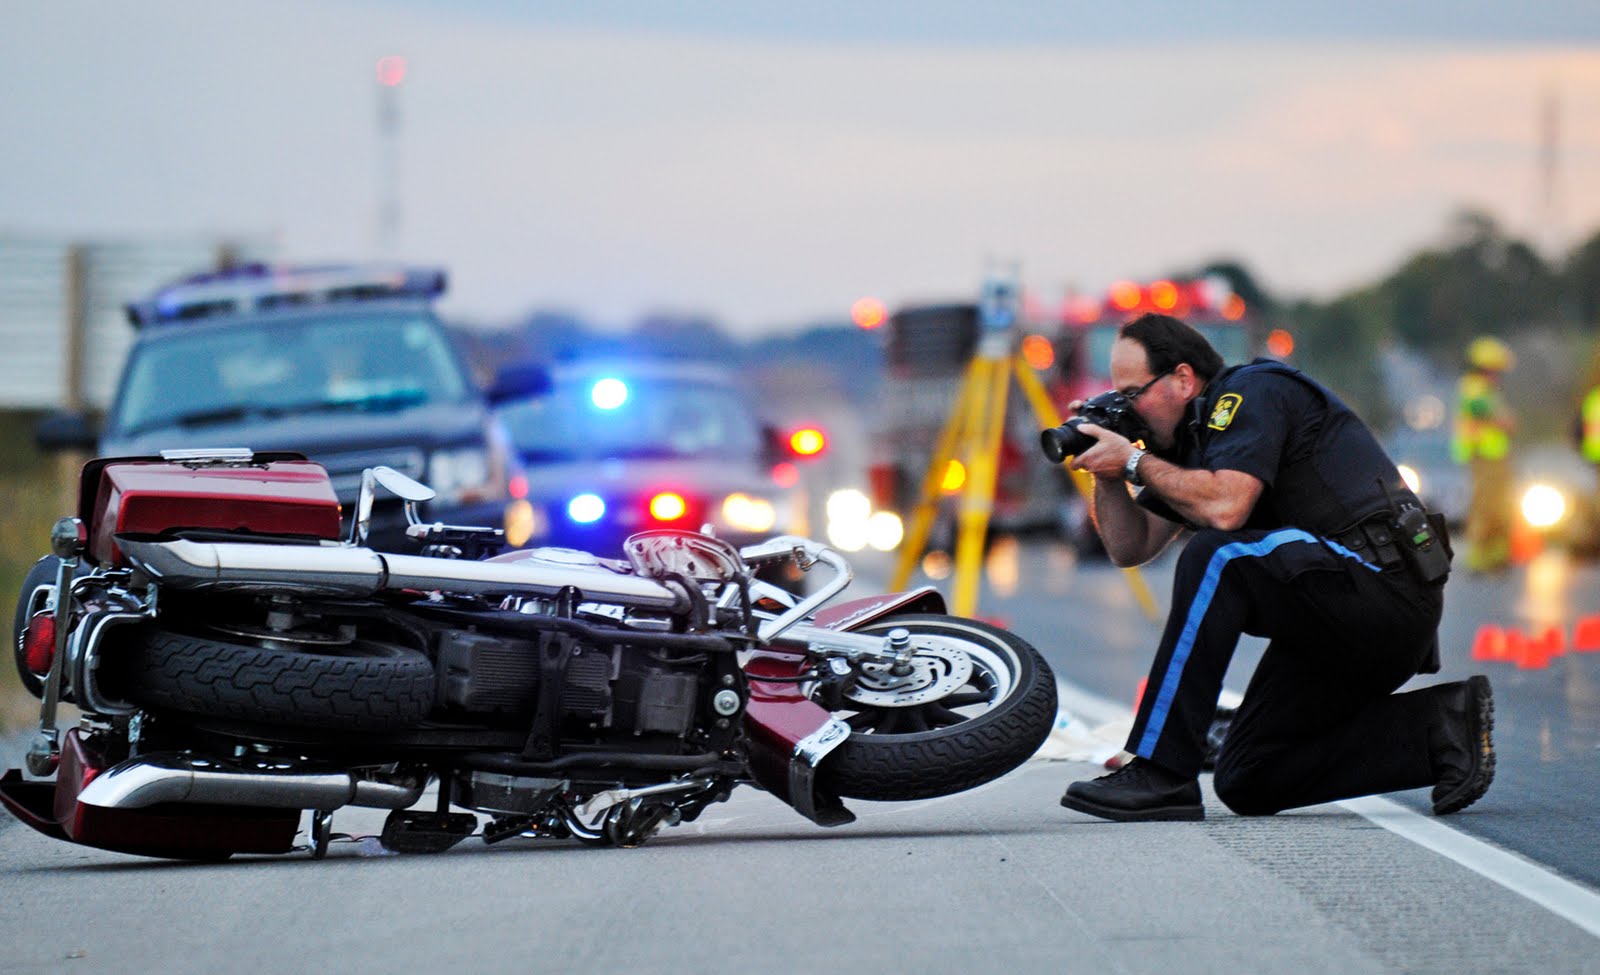 Motorcycle-accident-crash1